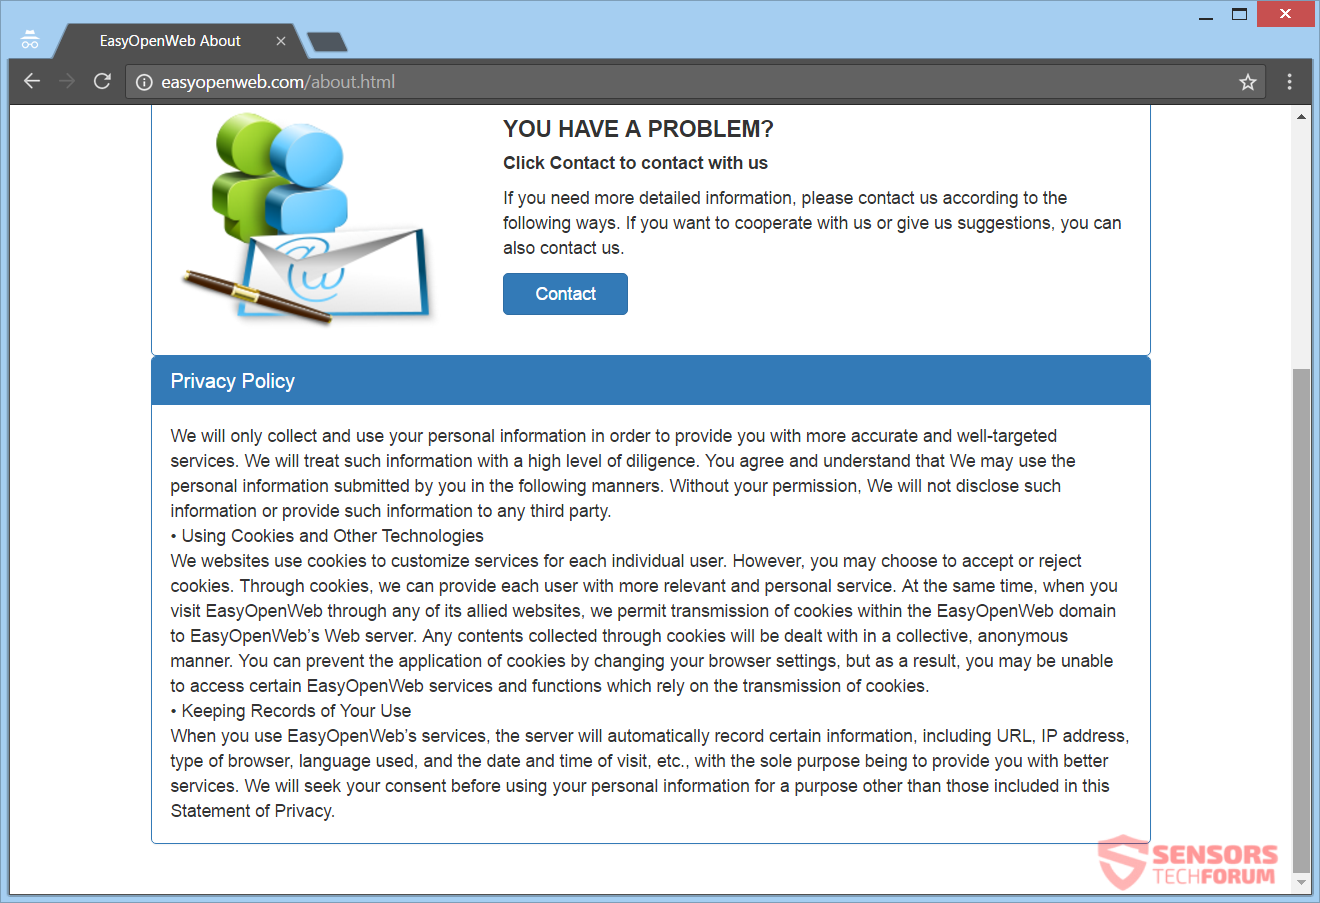 stf-easyopenweb-com-easy-open-web-com-browser-hijacker-redirect-privacy-policy